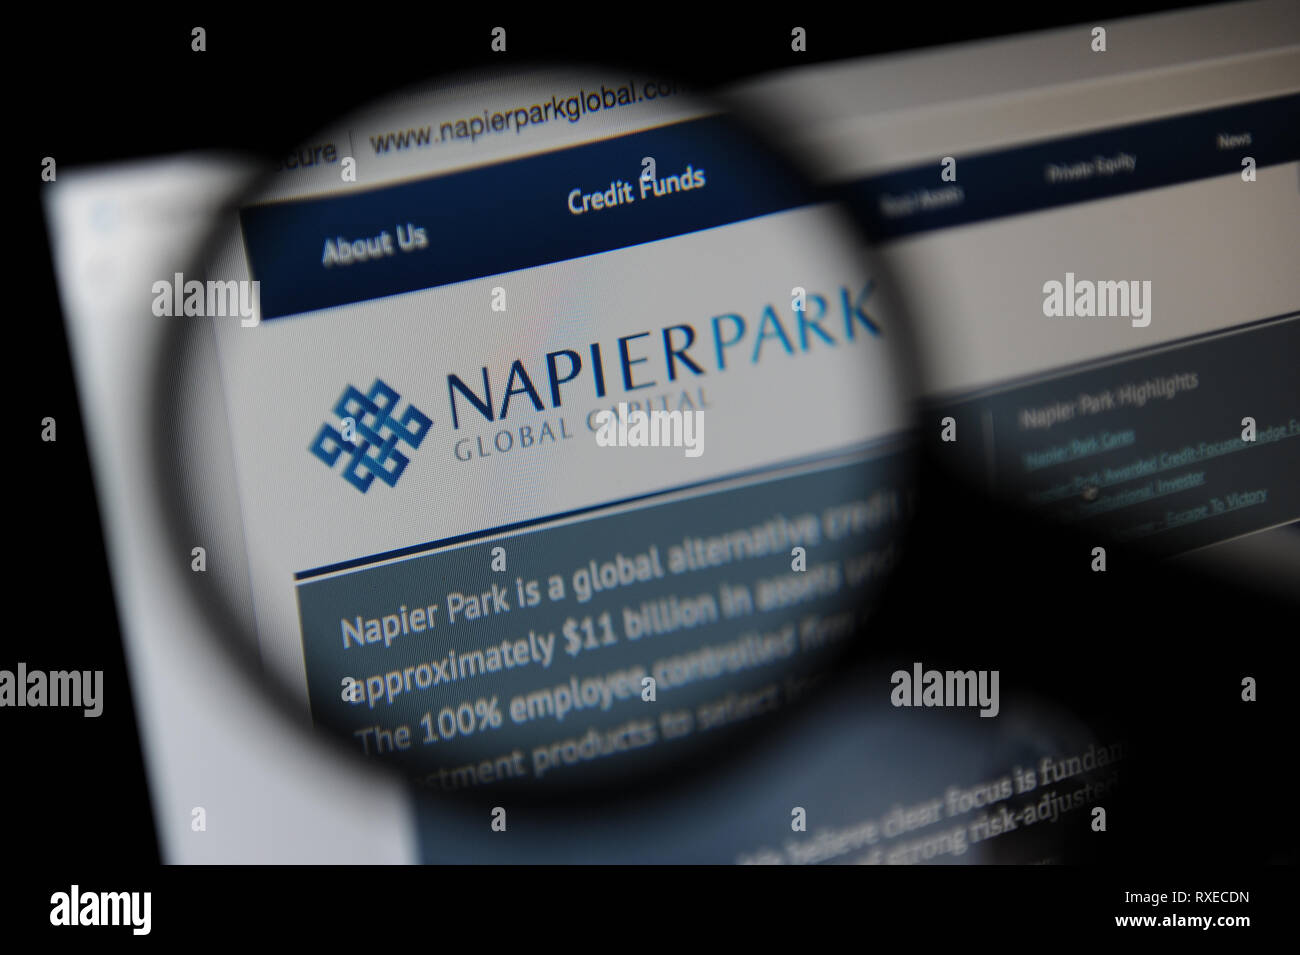 Napier Park Capital Global website vistos a través de una lupa Foto de stock